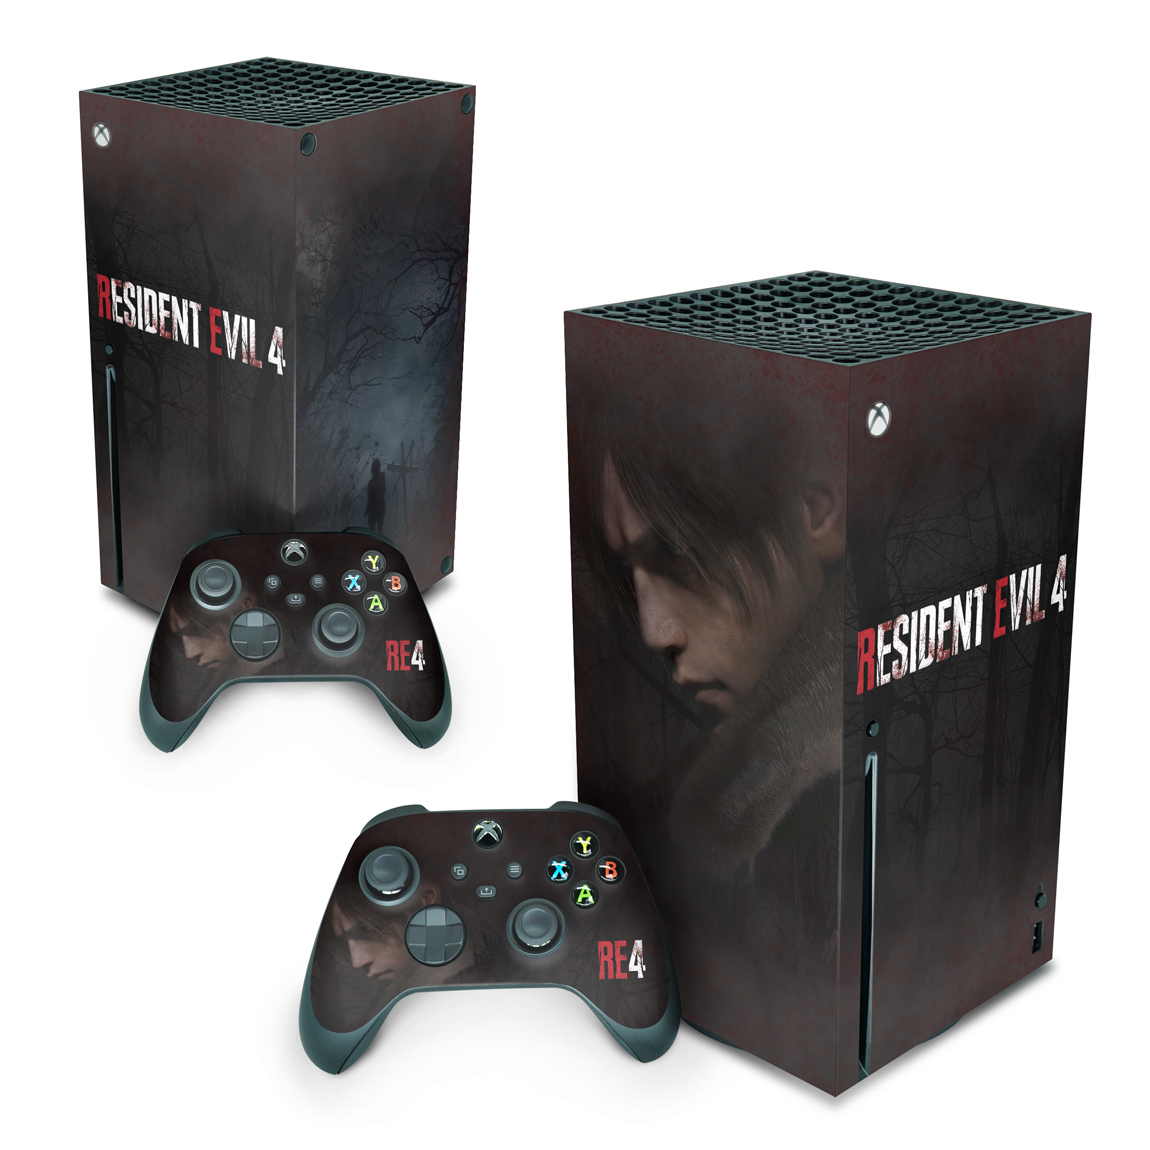 Resident Evil 4 Remake Xbox Series XS Mídia Digital - ALNGAMES - JOGOS EM  MÍDIA DIGITAL